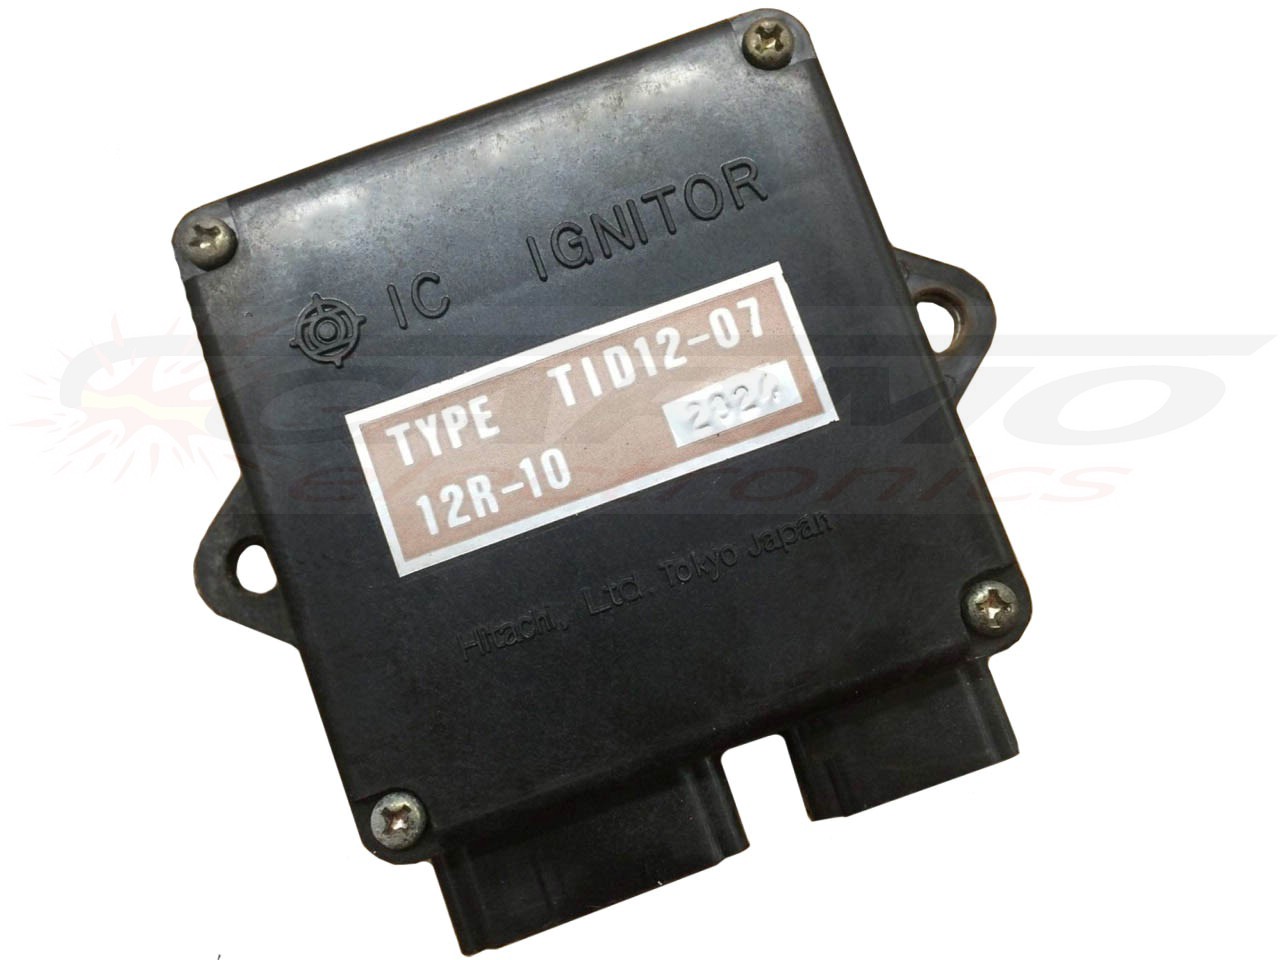 XS400 Maxim Seca TCI CDI dispositif de commande boîte noire (TID12-07, 12R-10)